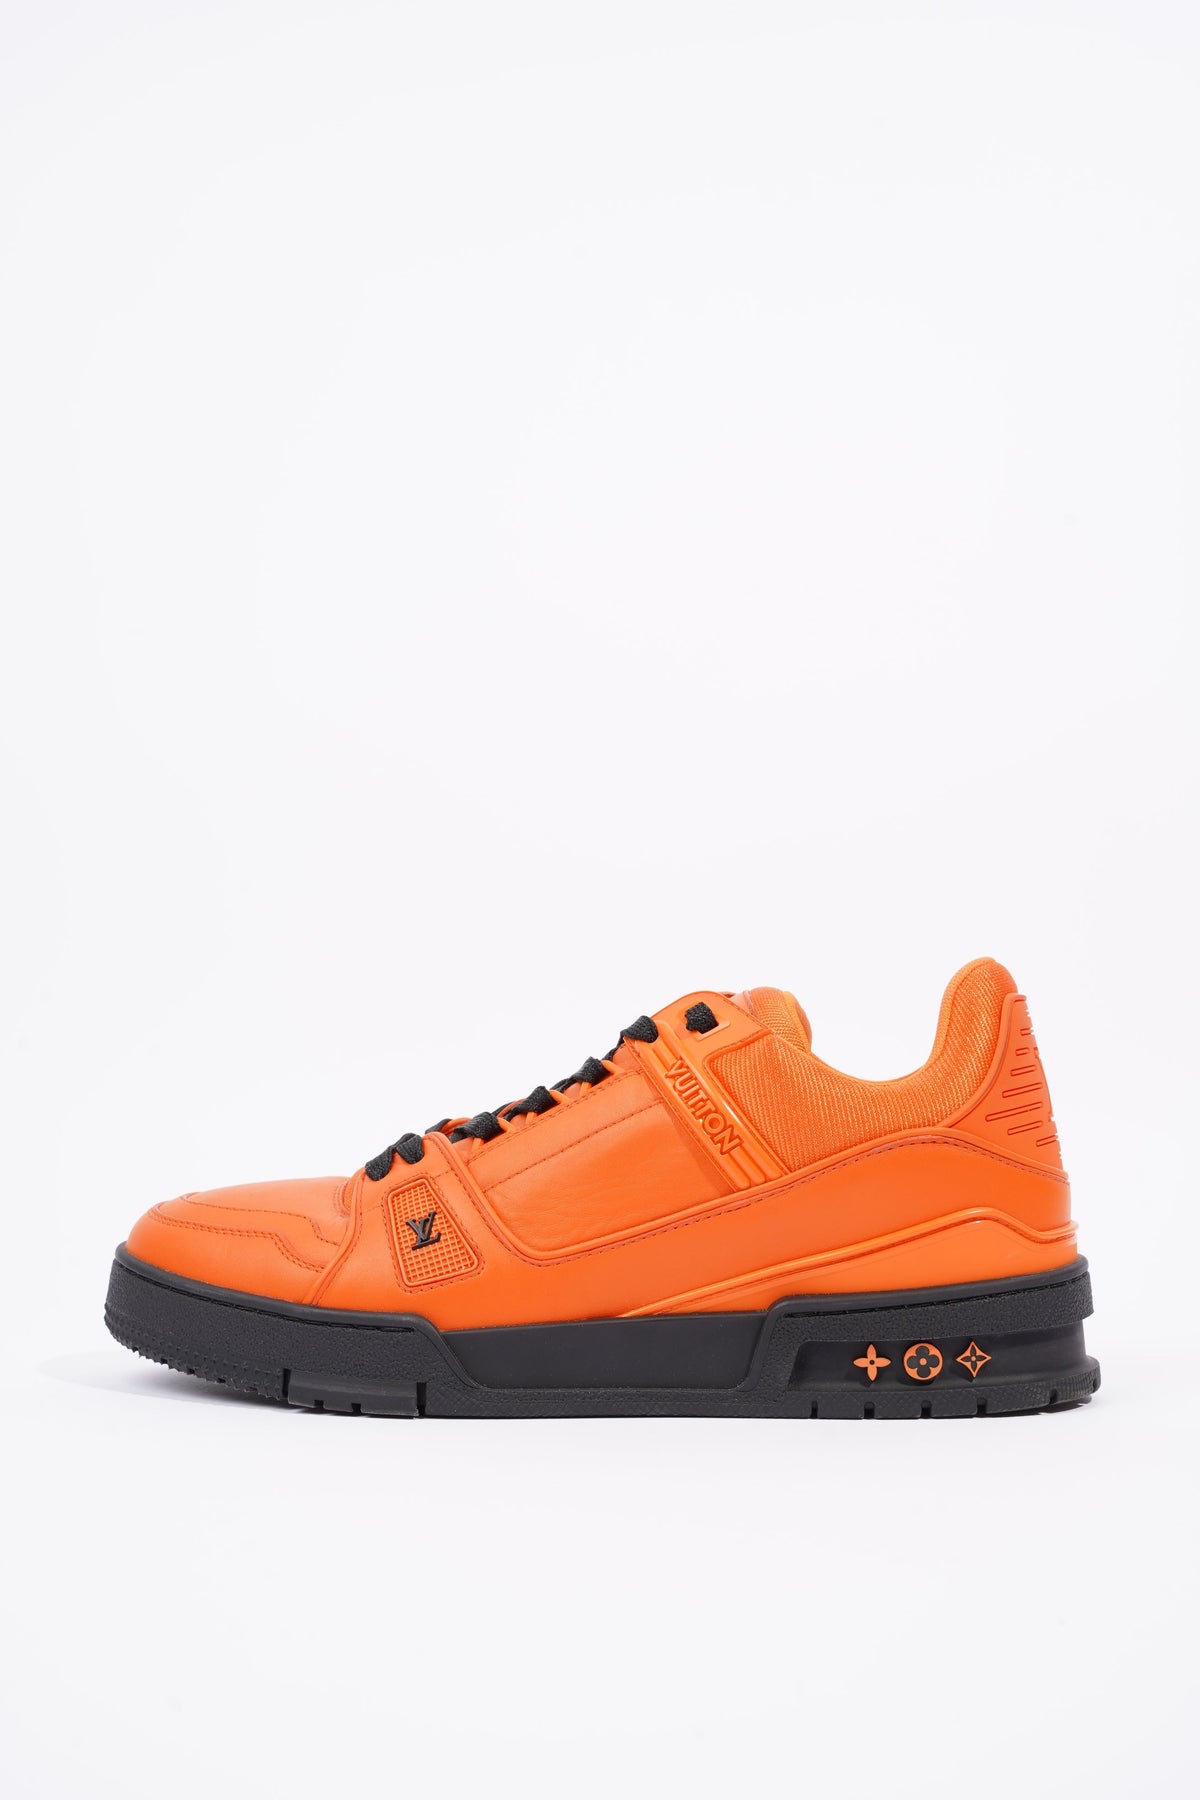 Louis Vuitton Mens Virgil Abloh Sneaker Orange / Black EU 41 / UK 7 – Luxe  Collective